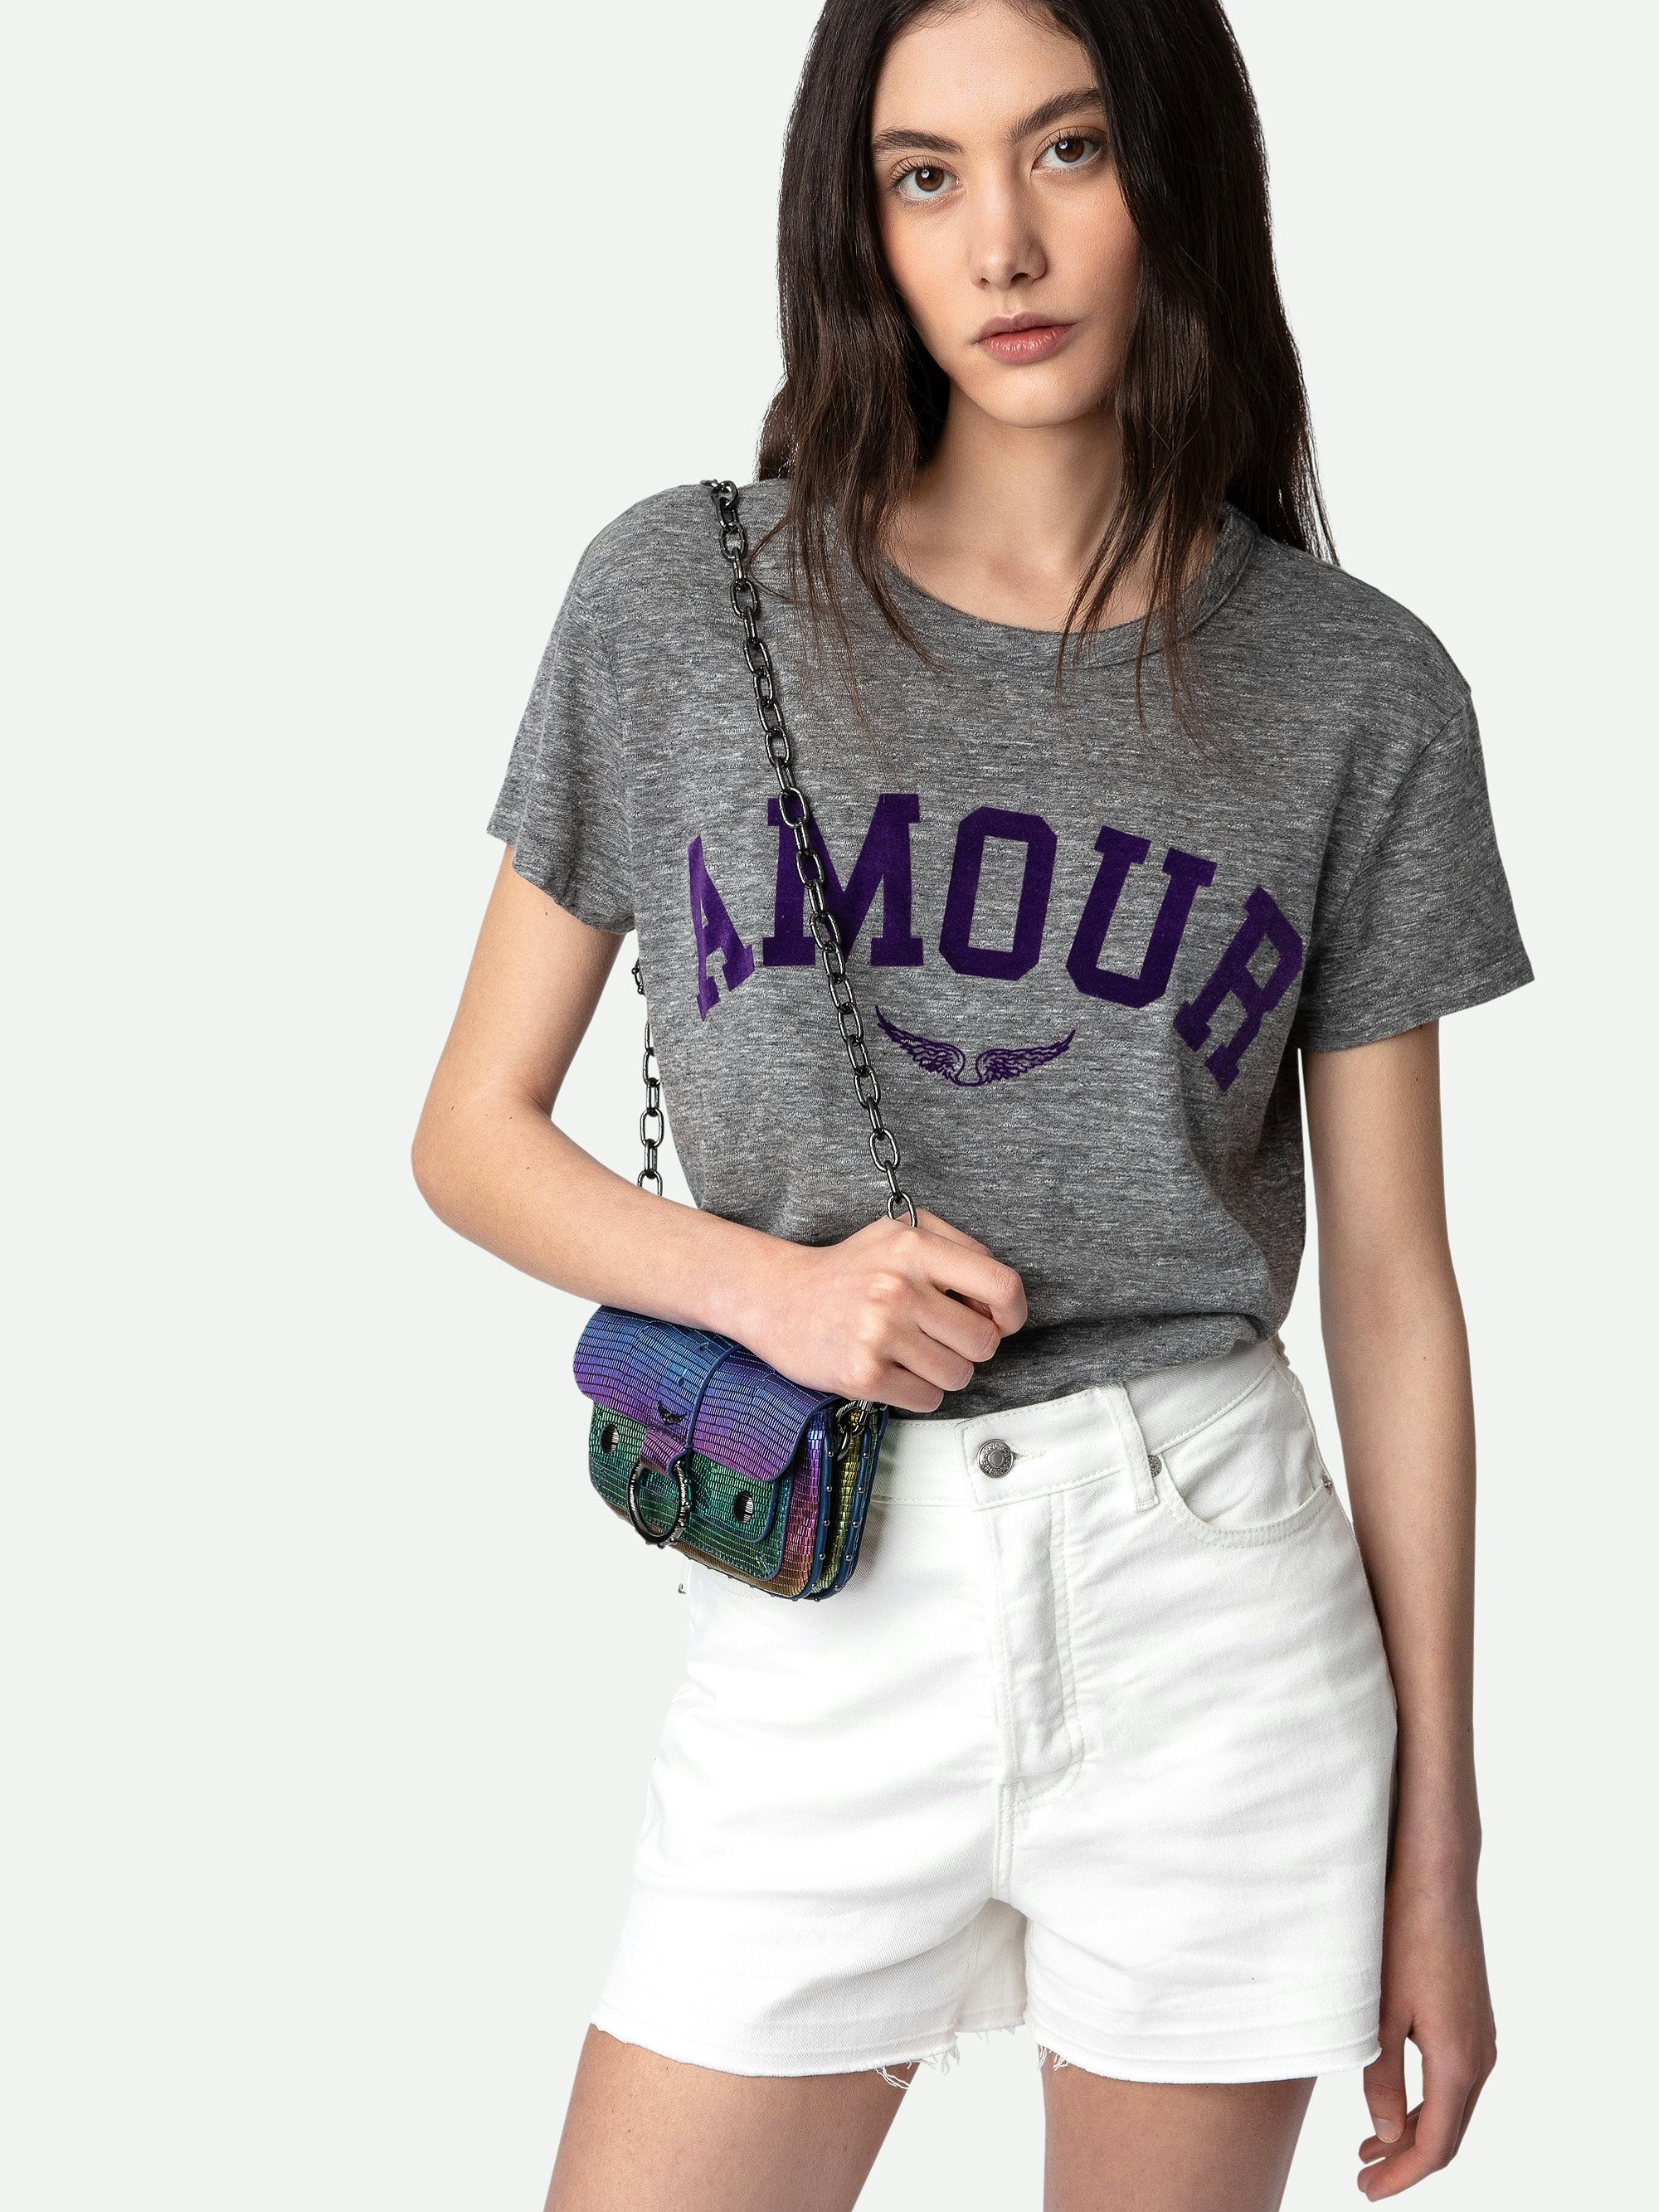 Walk Amour T-shirt - 5